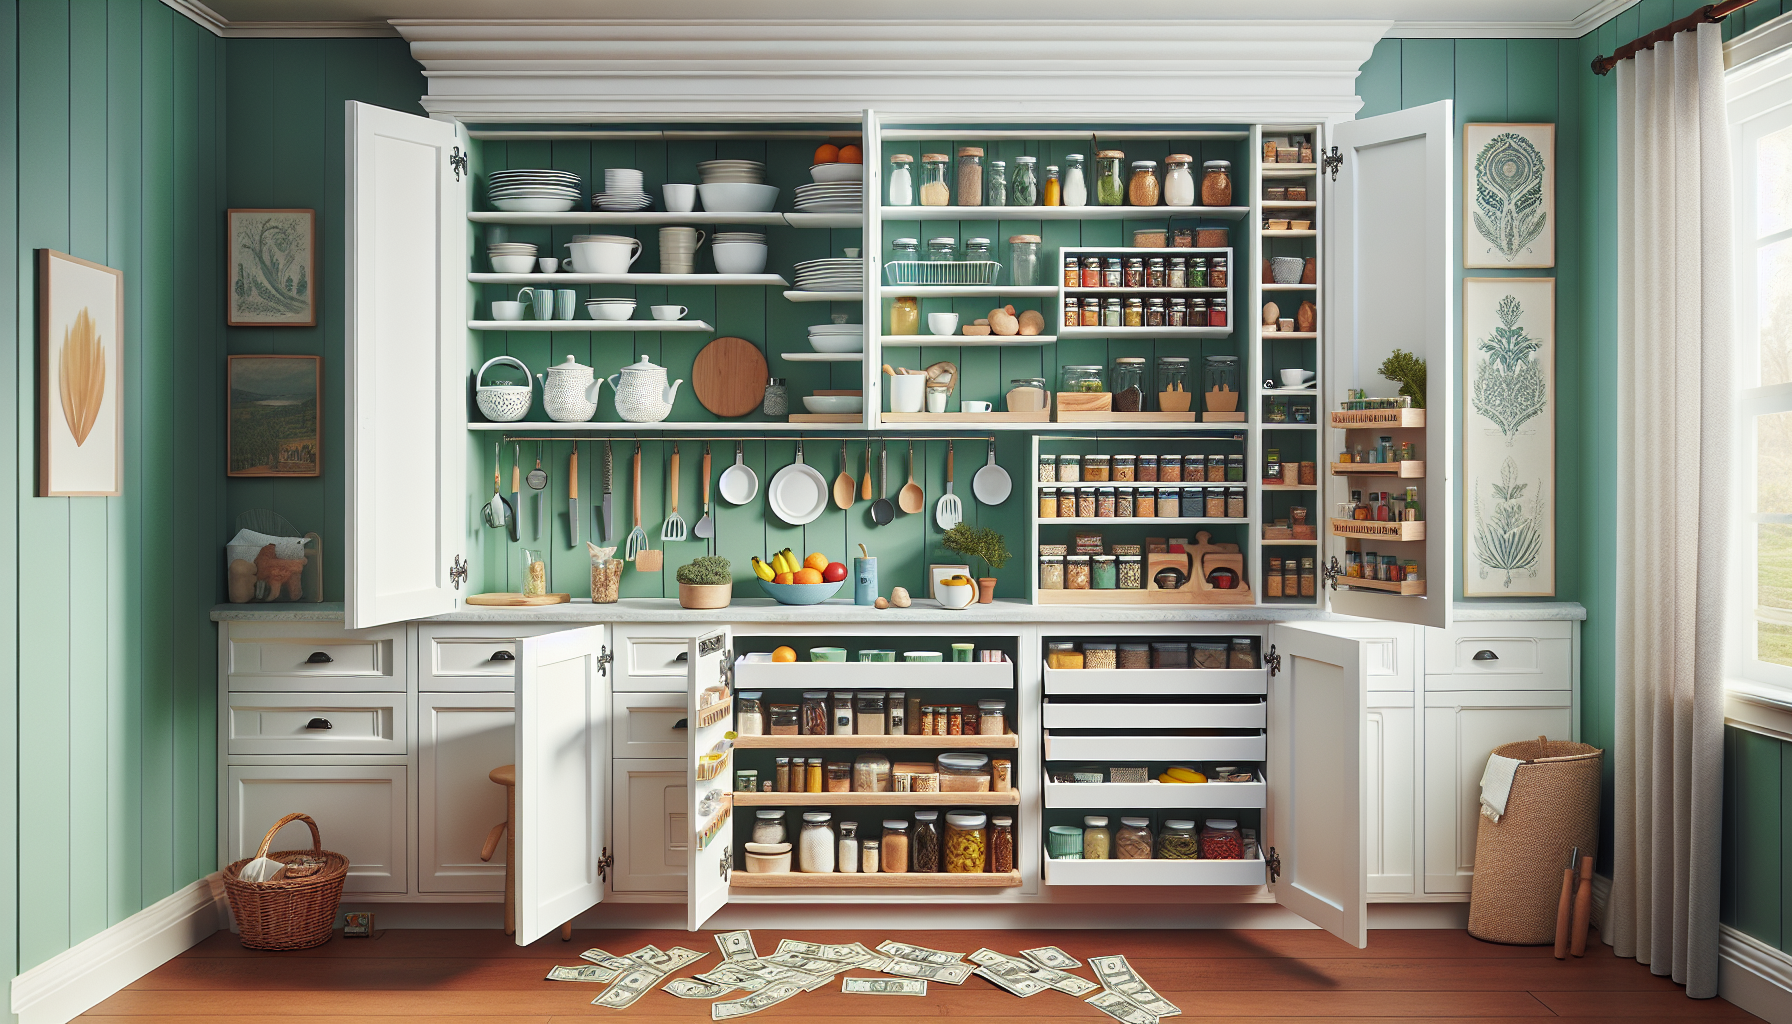 Inexpensive kitchen update: DIY cabinet storage ideas from Dollar Tree